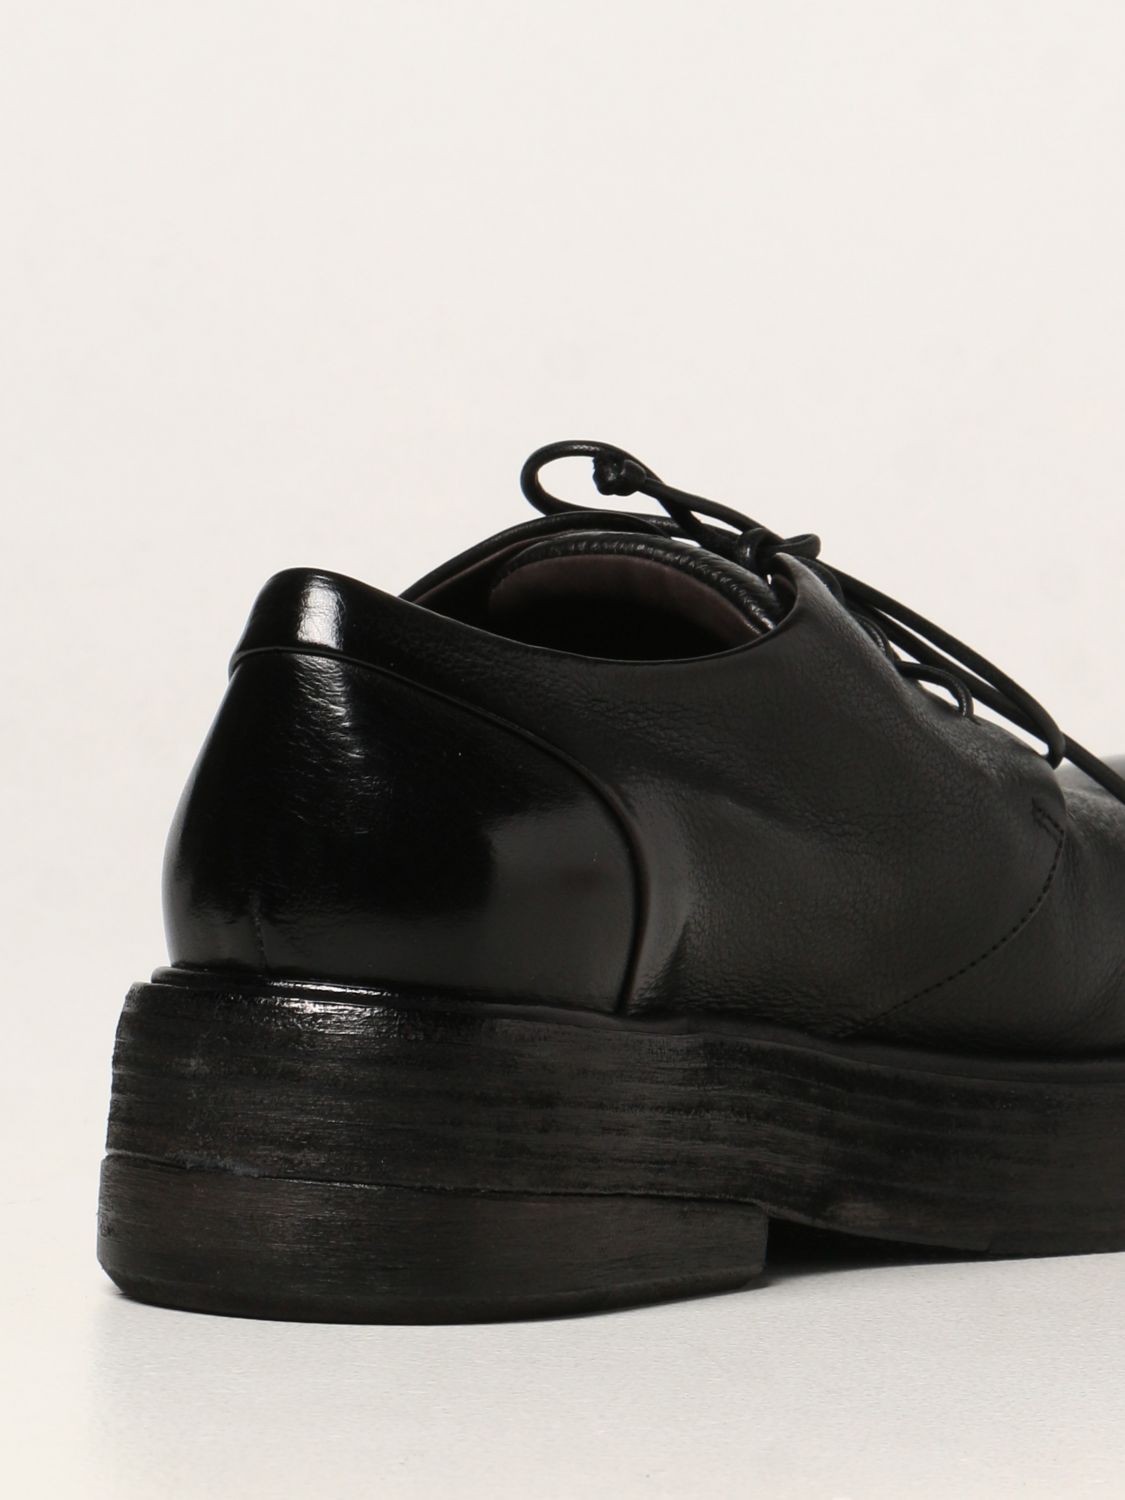 Derbies Marsèll: Chaussures femme Marsell noir 3